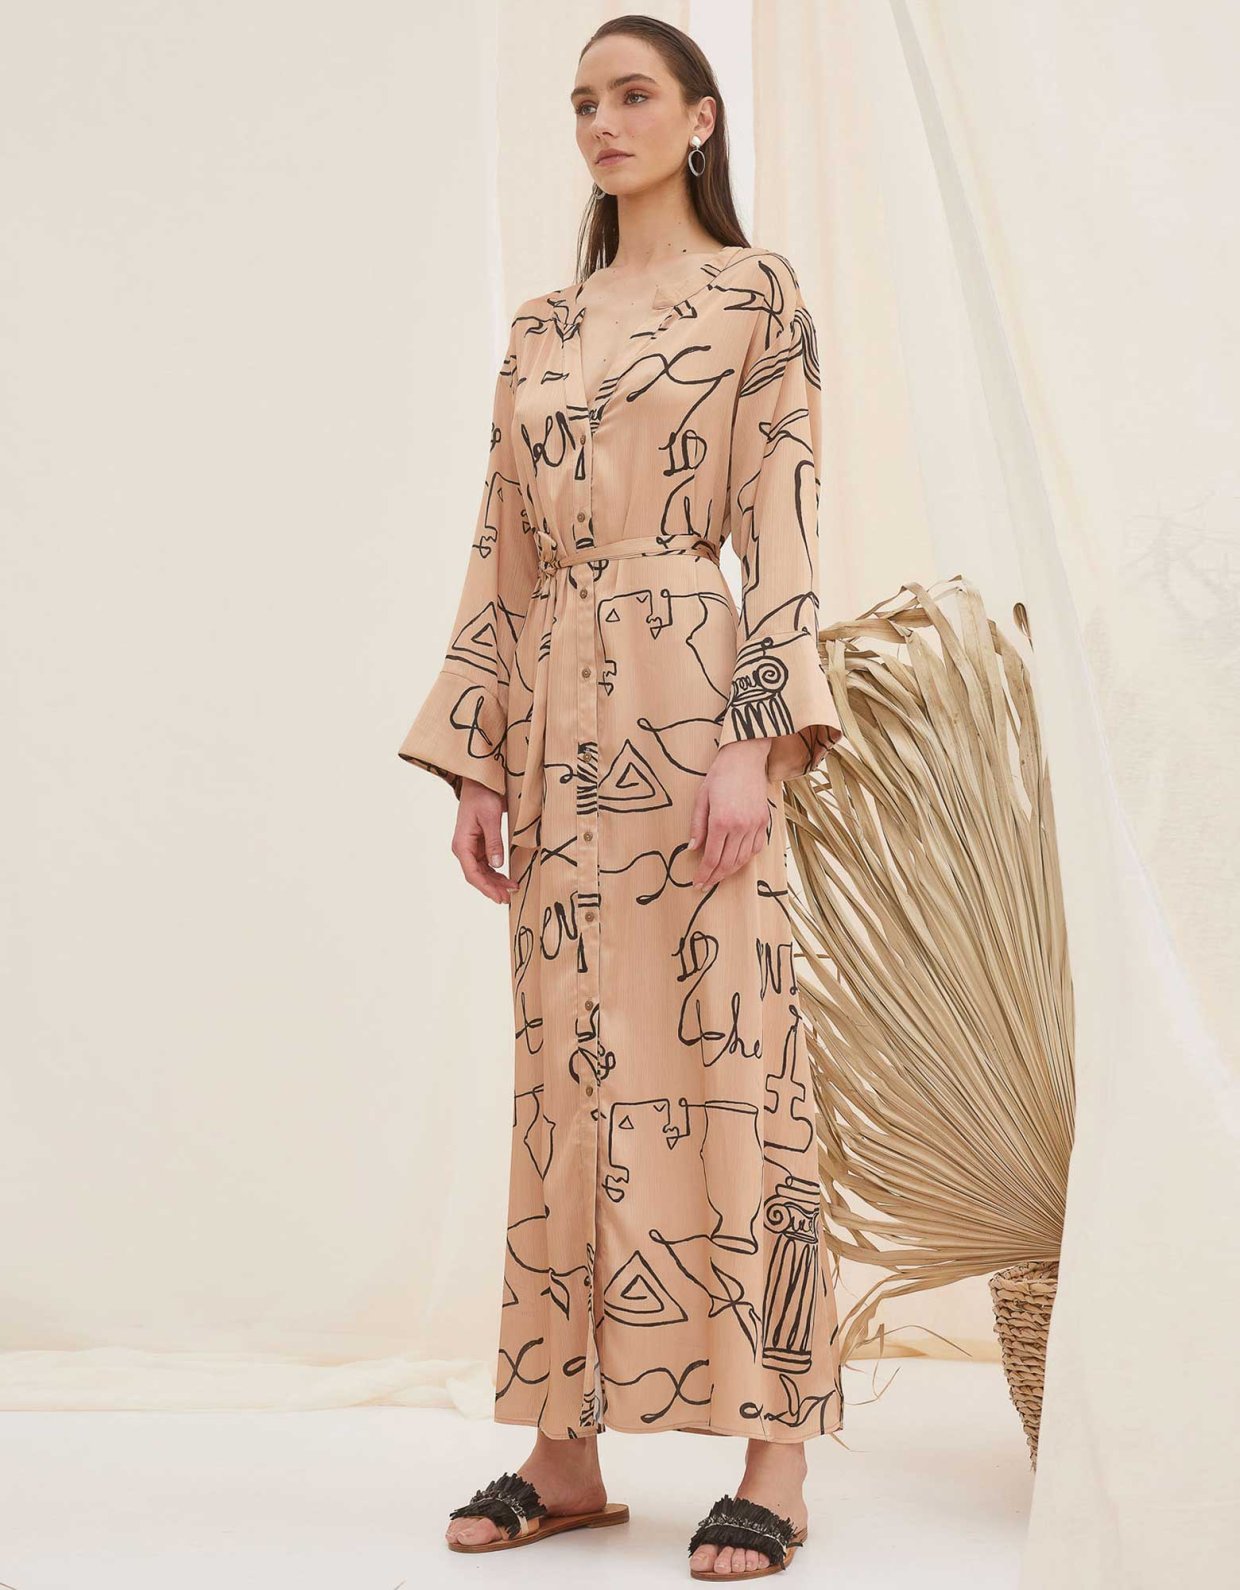 The Knl's Ariadne satin maxi dress print beige line